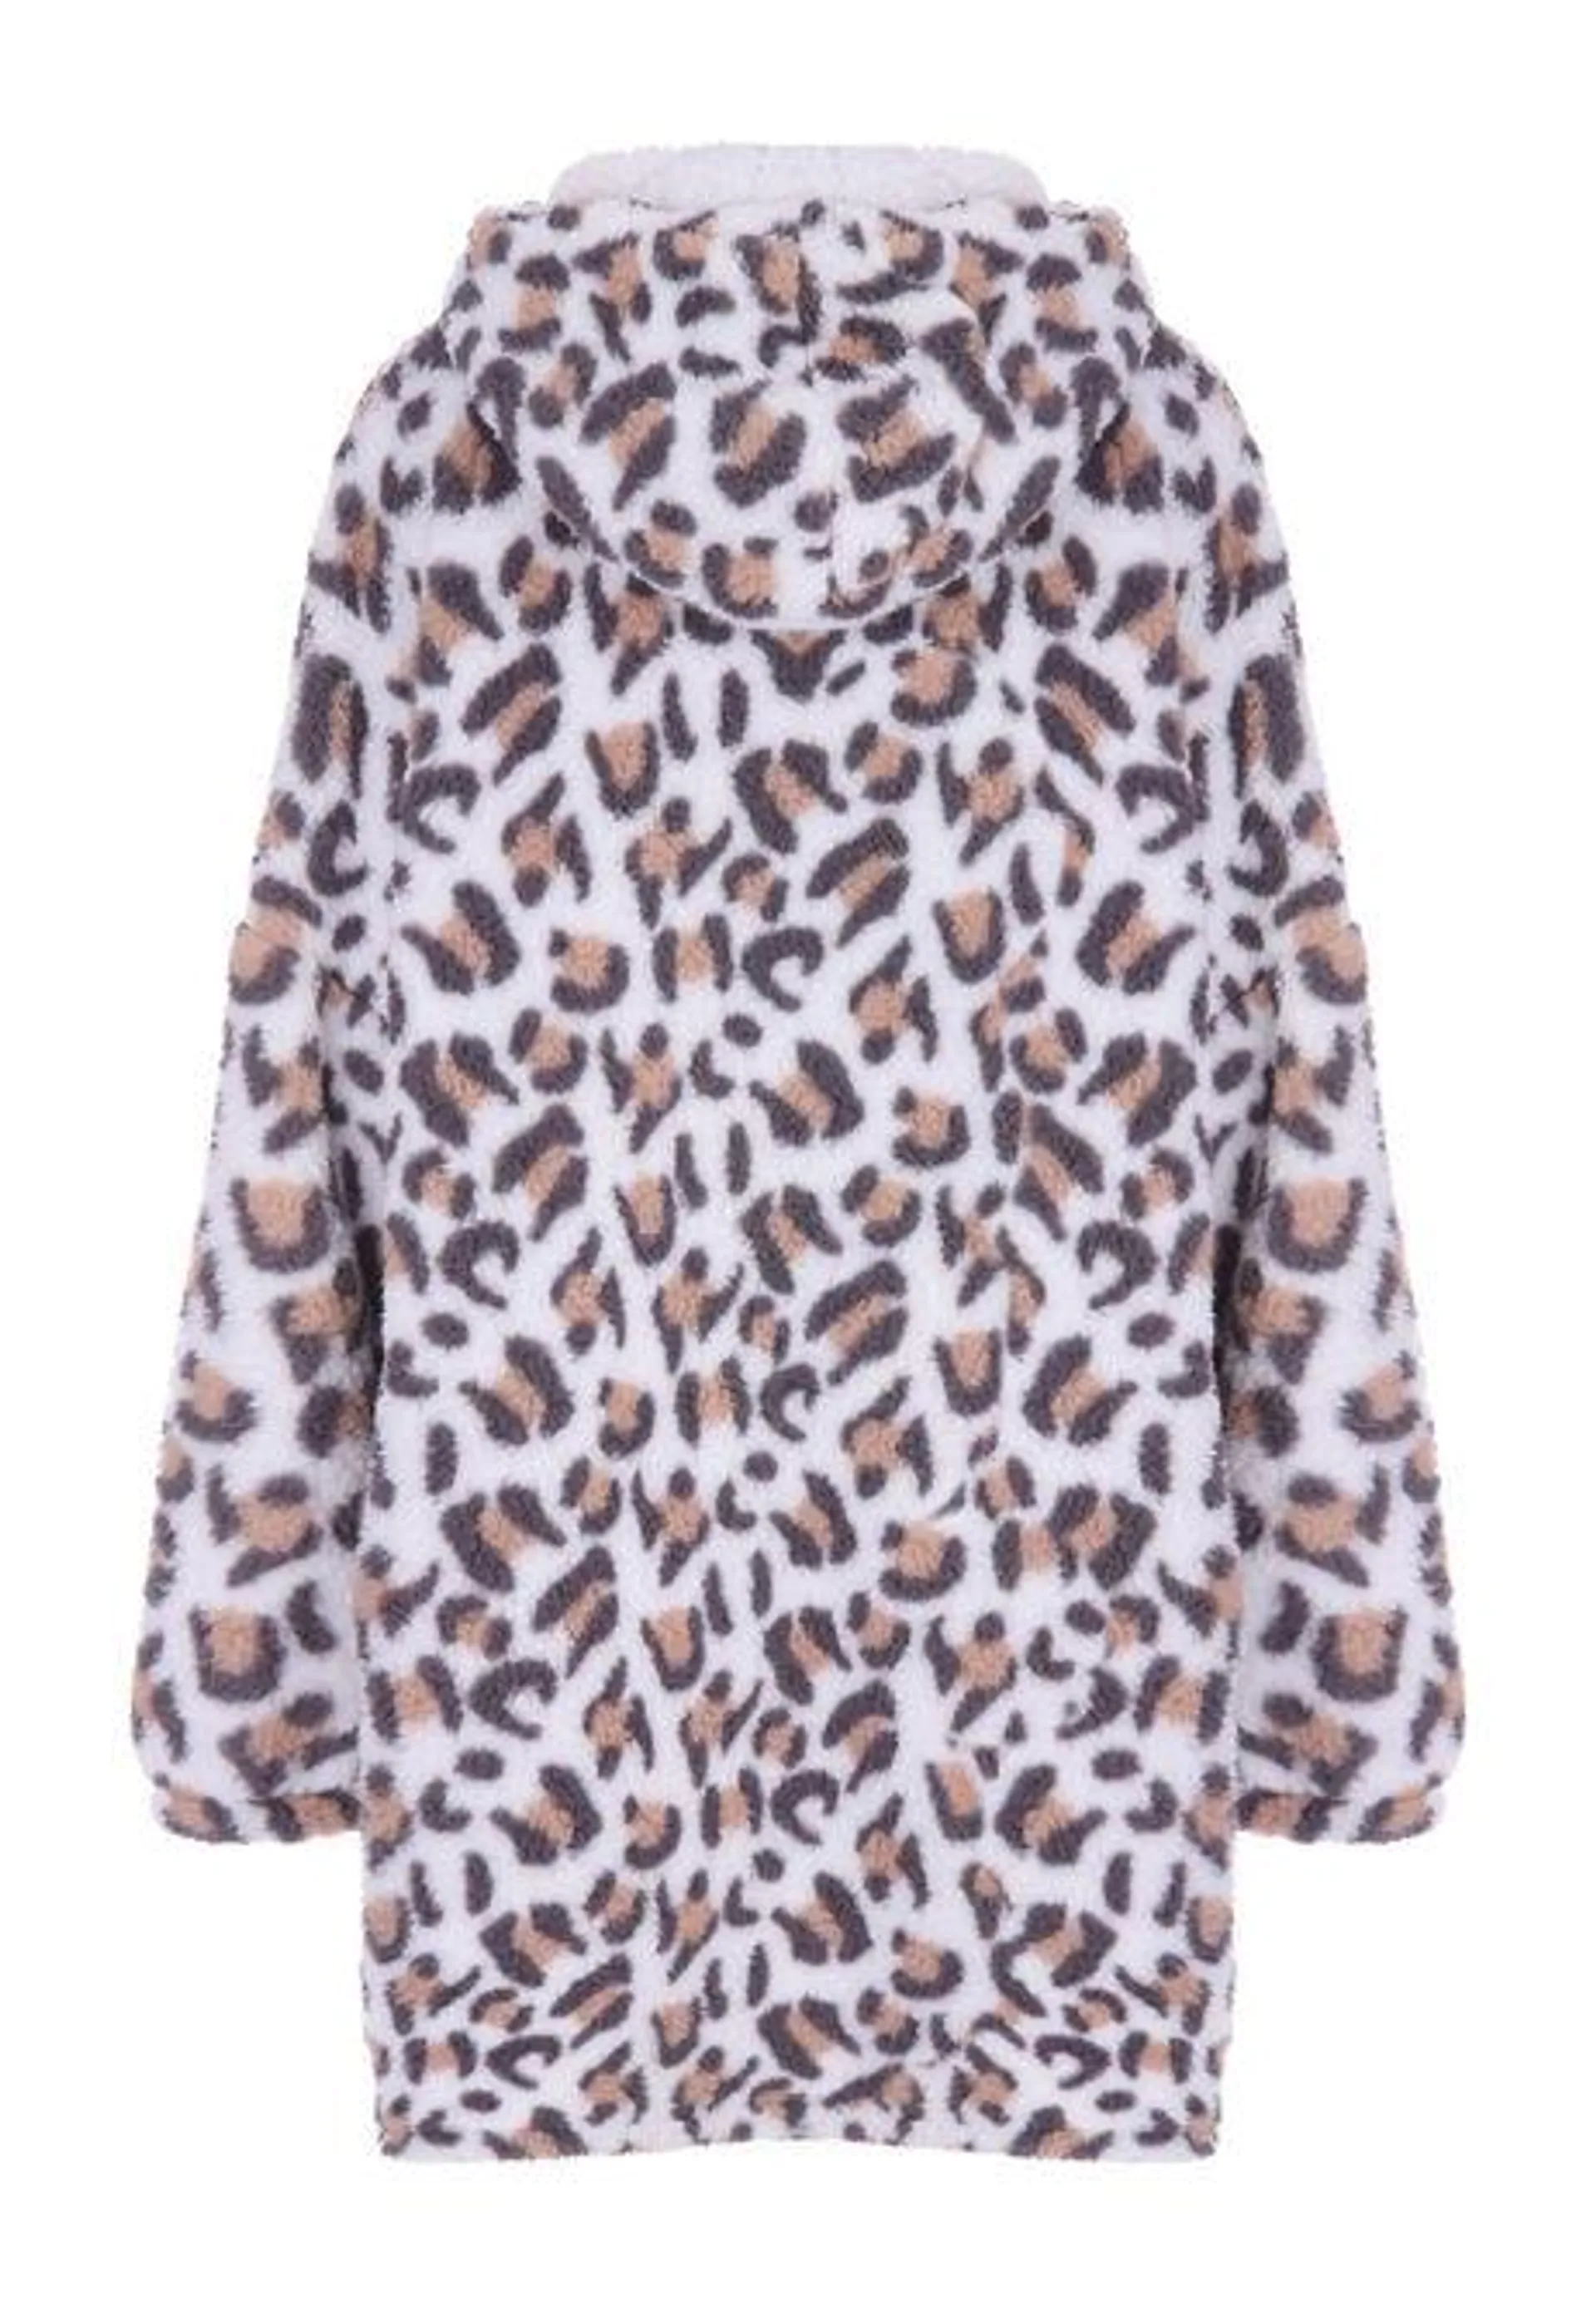 Womens Cream Leopard Hooded Blanket